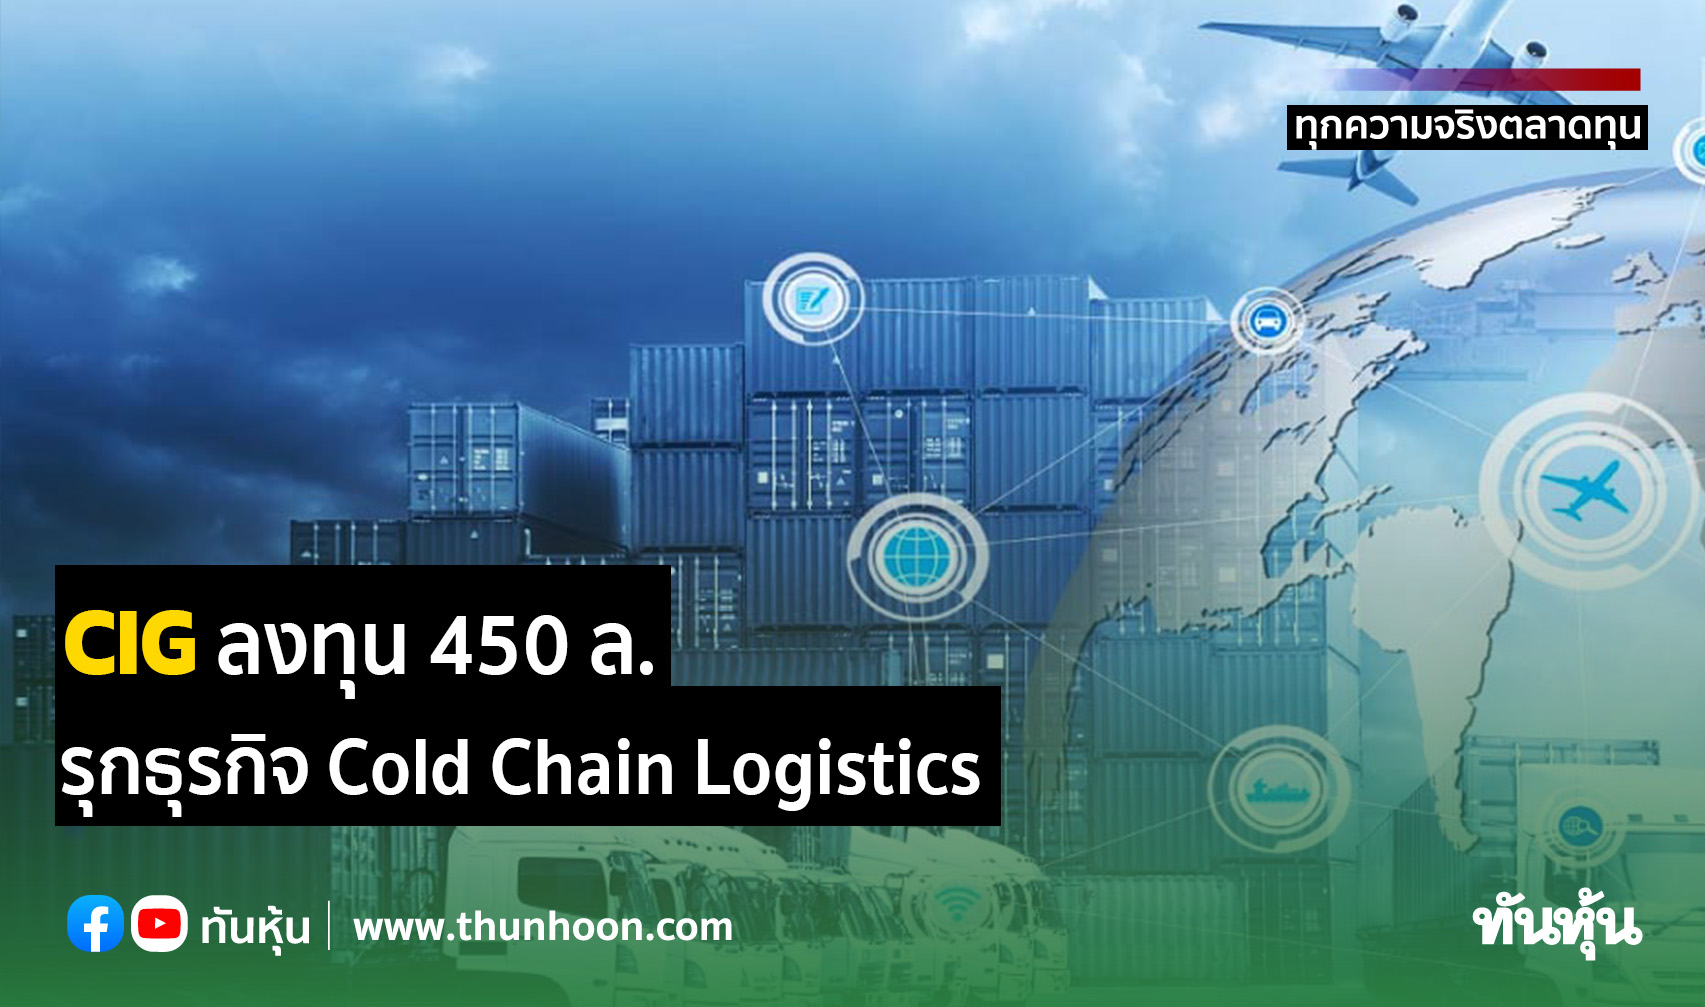 CIG ลงทุน 450 ล. รุกธุรกิจ Cold Chain Logistics